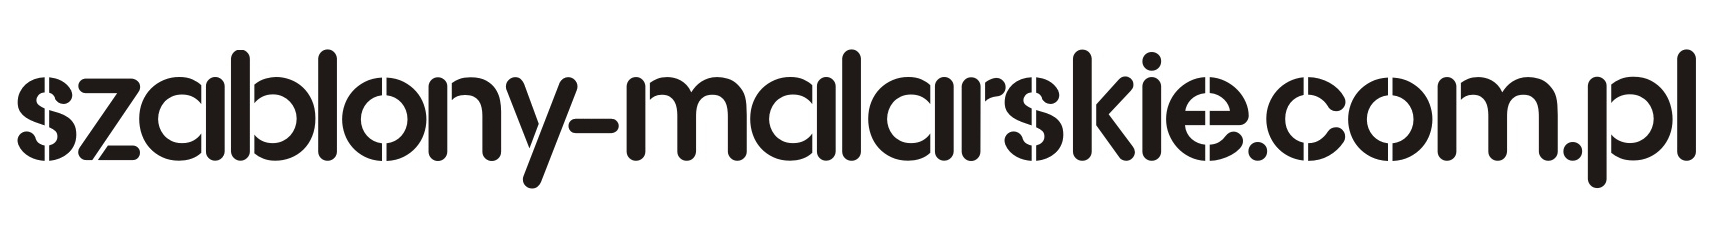 szablony-malarskie.com.pl - logo